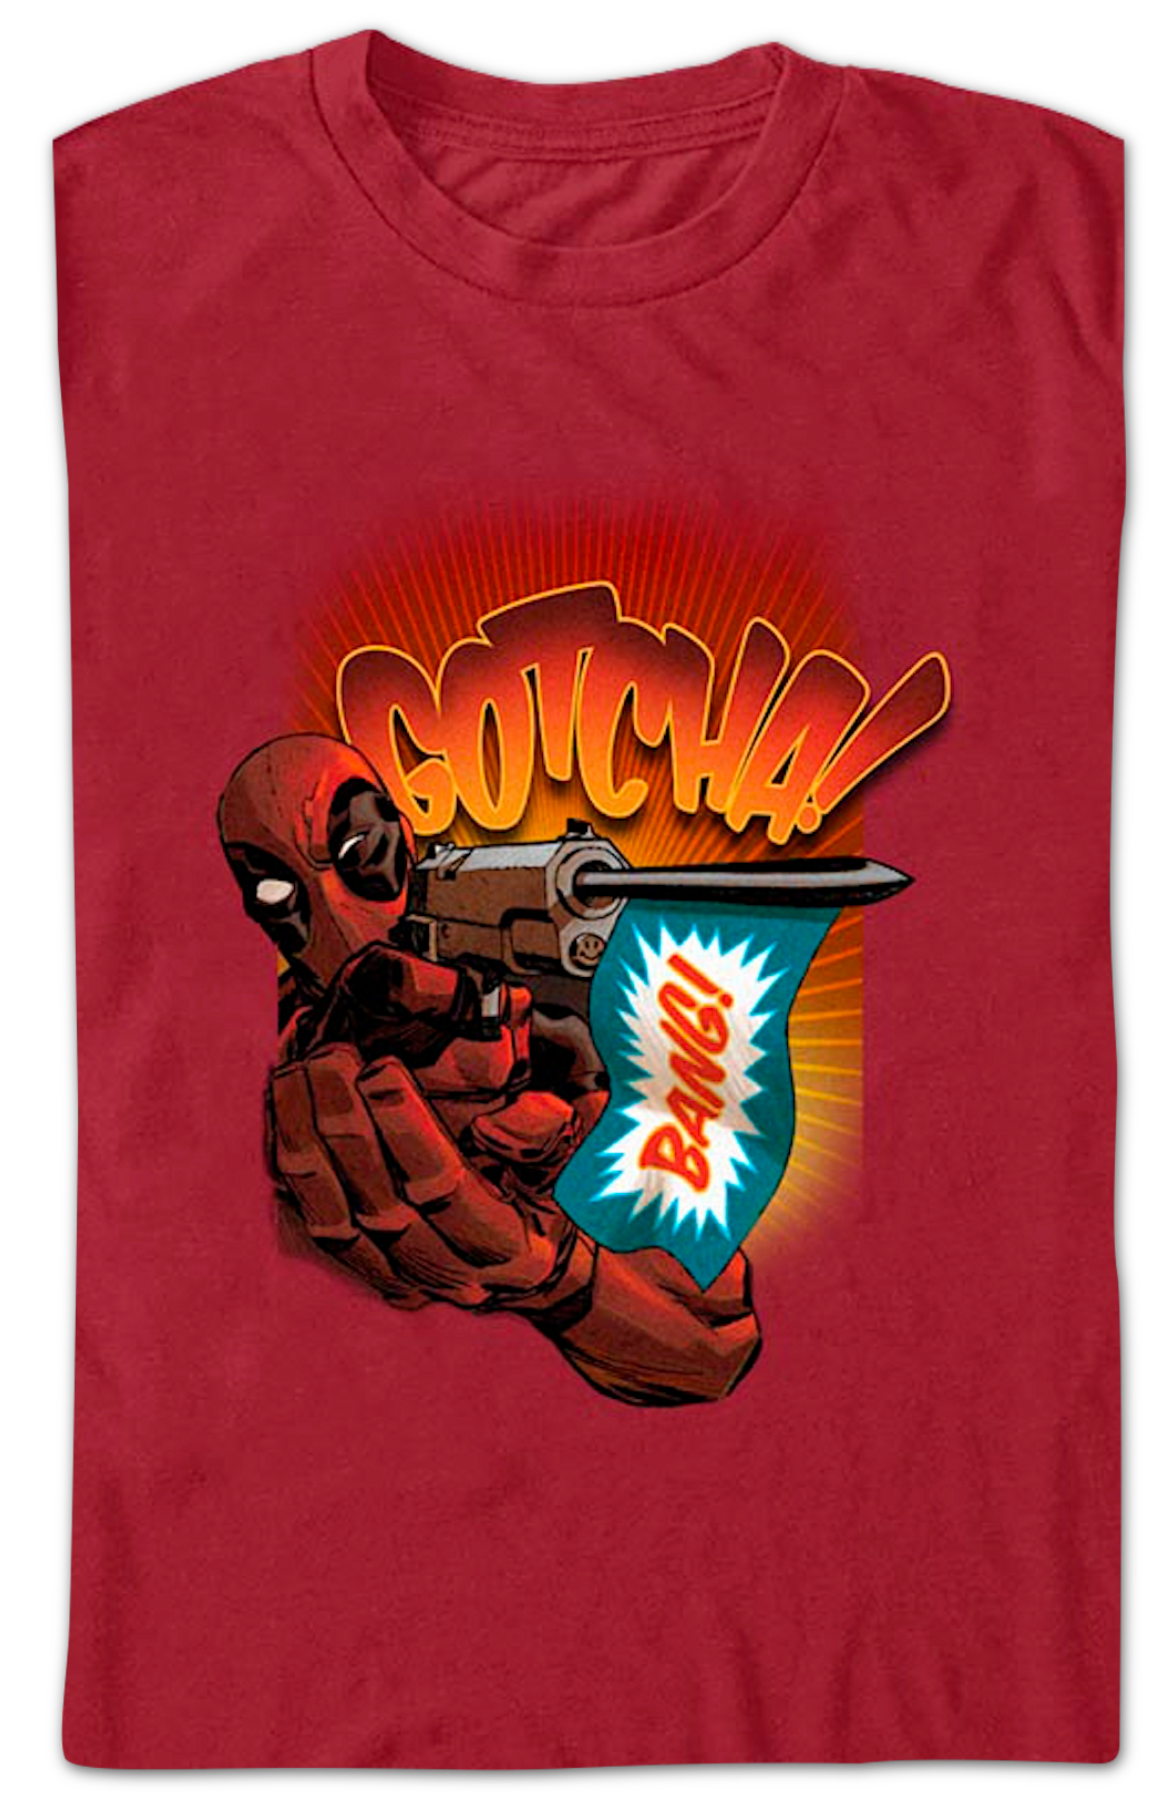 Deadpool Gotcha Marvel Comics T-Shirt